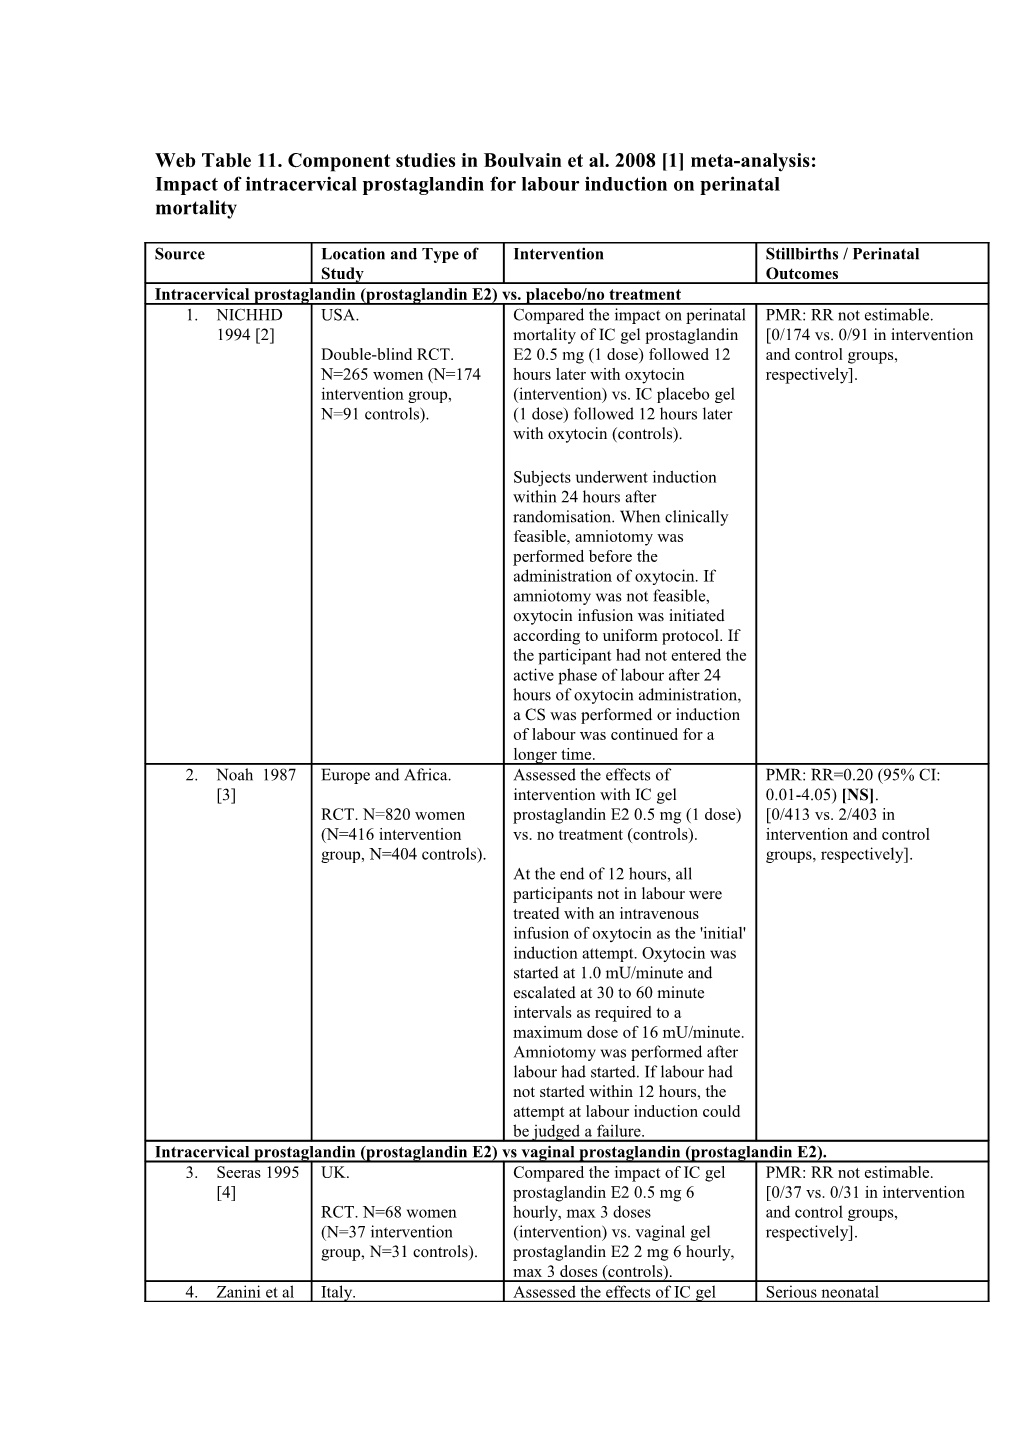 Web Table 11. Component Studies in Boulvain Et Al. 2008 1 Meta-Analysis: Impact Of